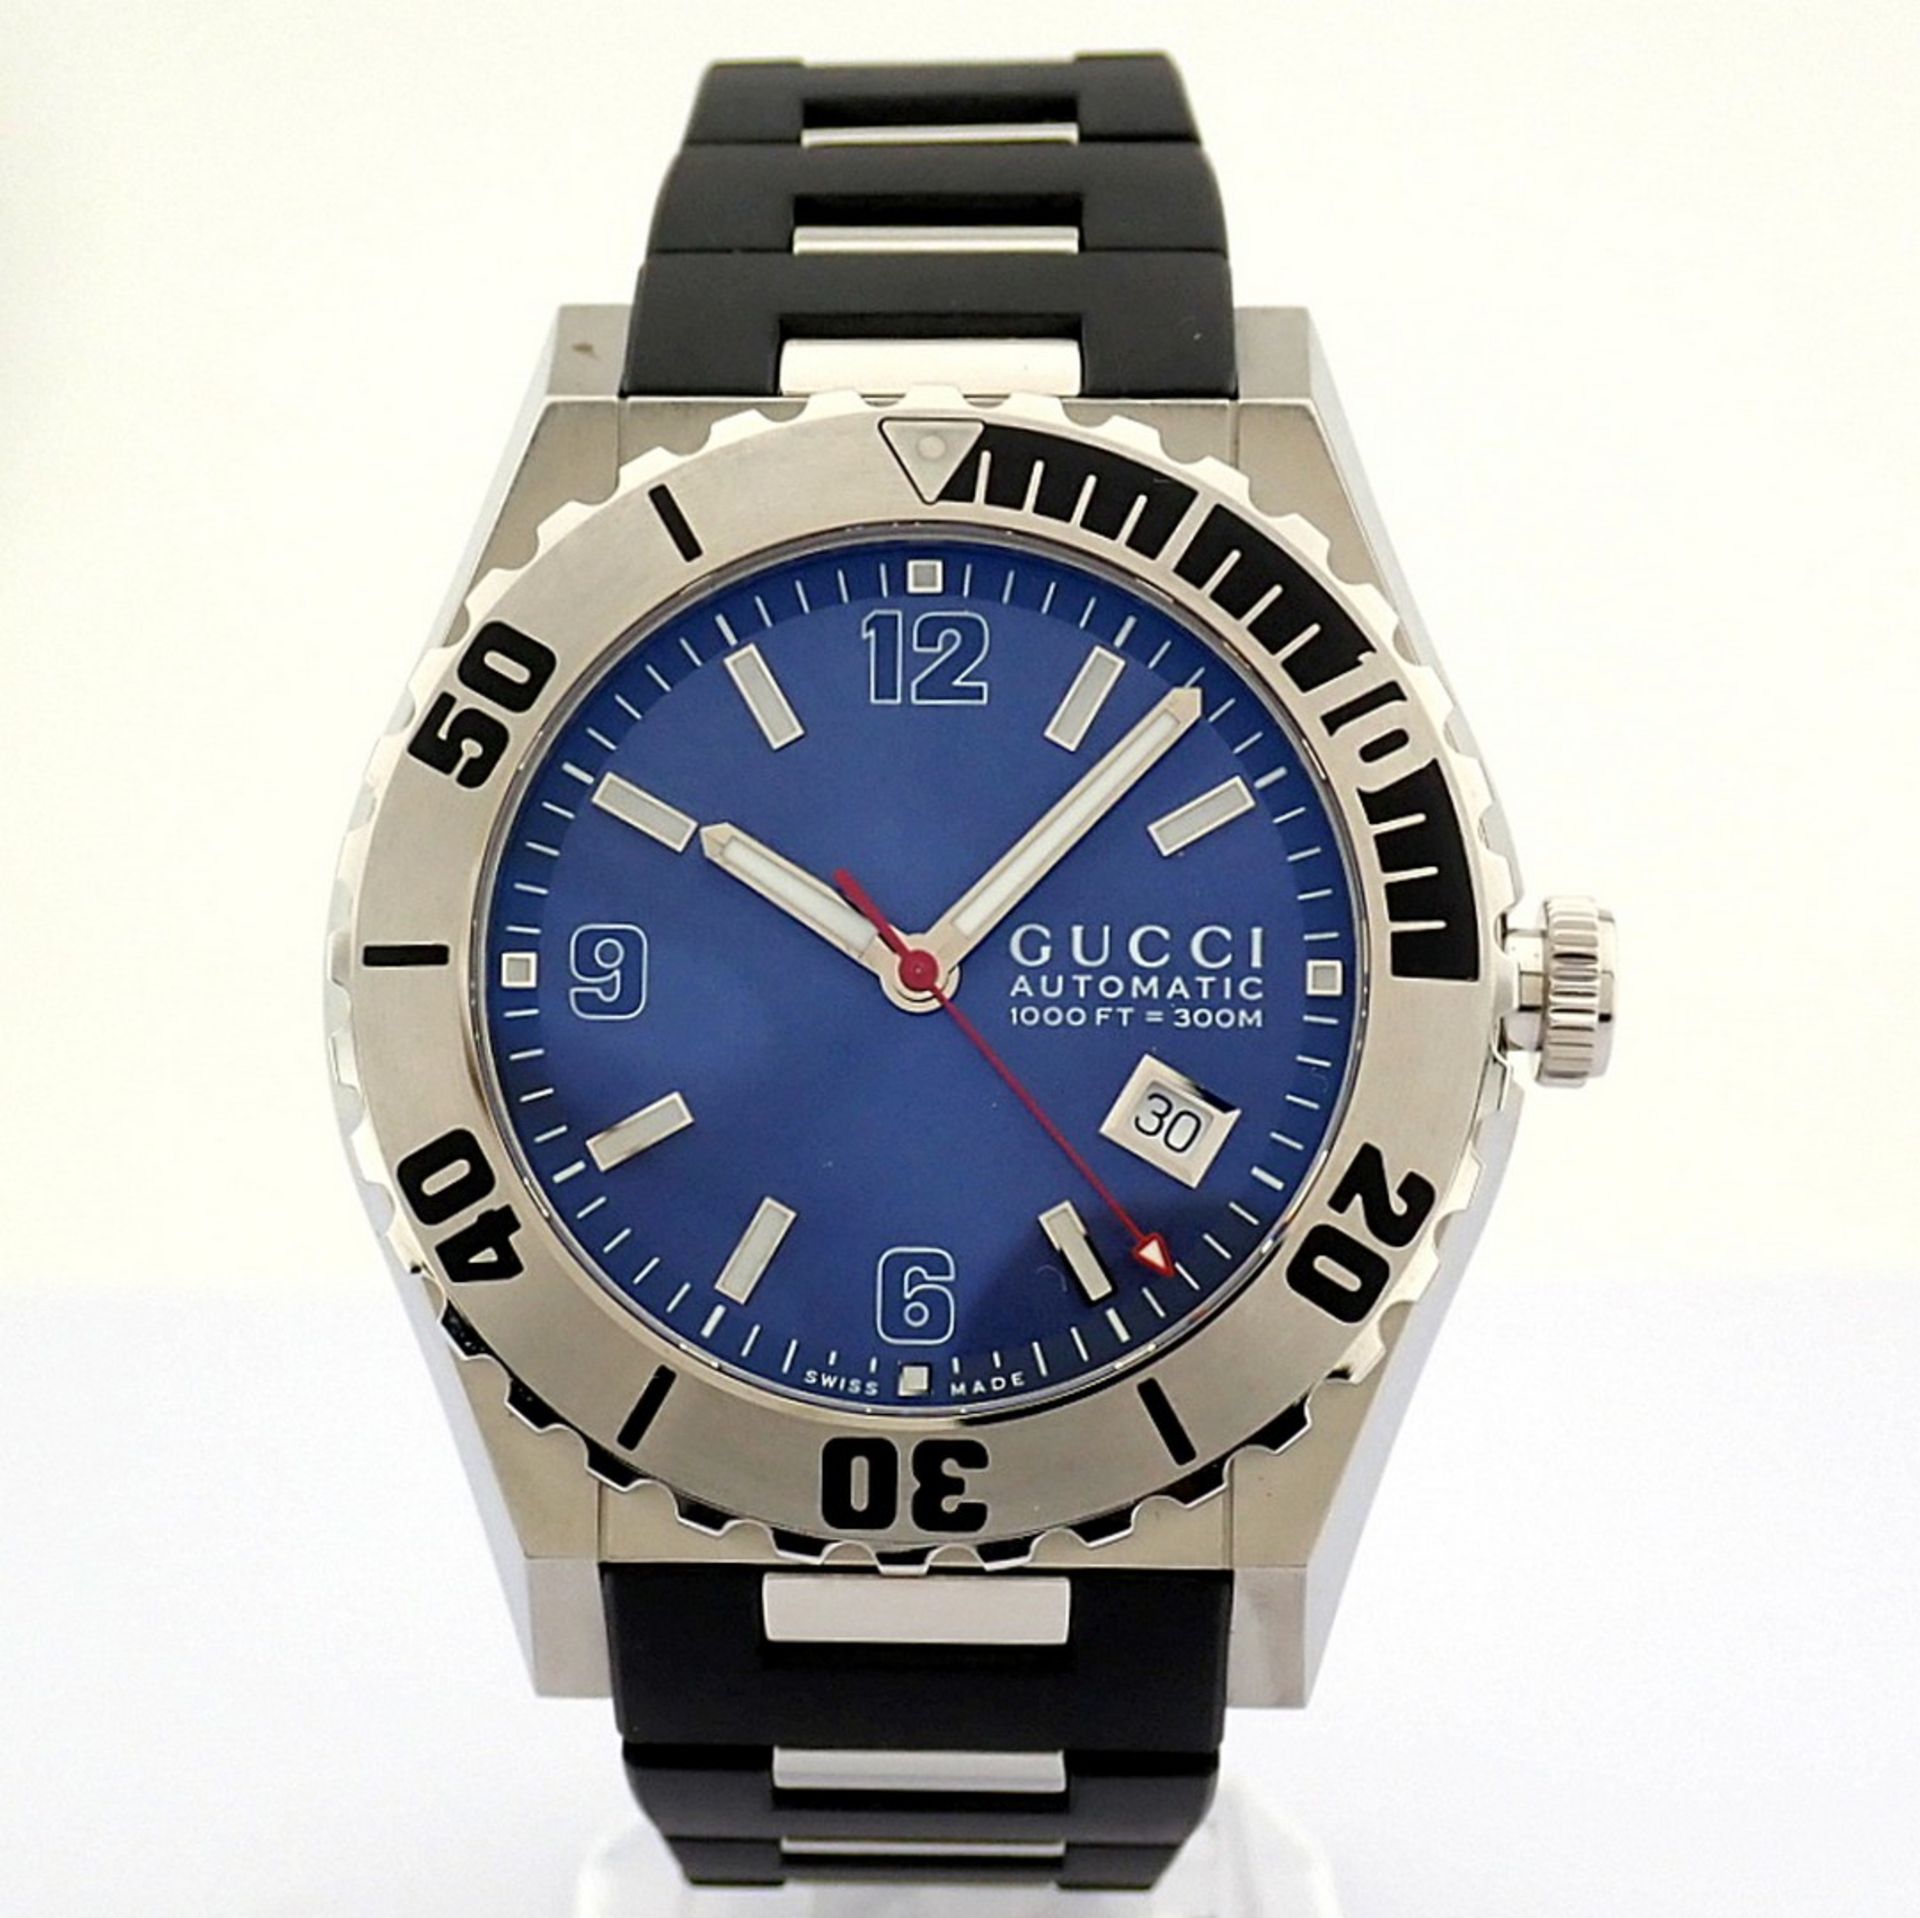 Gucci / Pantheon 115.2 (Brand New) - Gentlmen's Steel Wrist Watch - Image 6 of 13